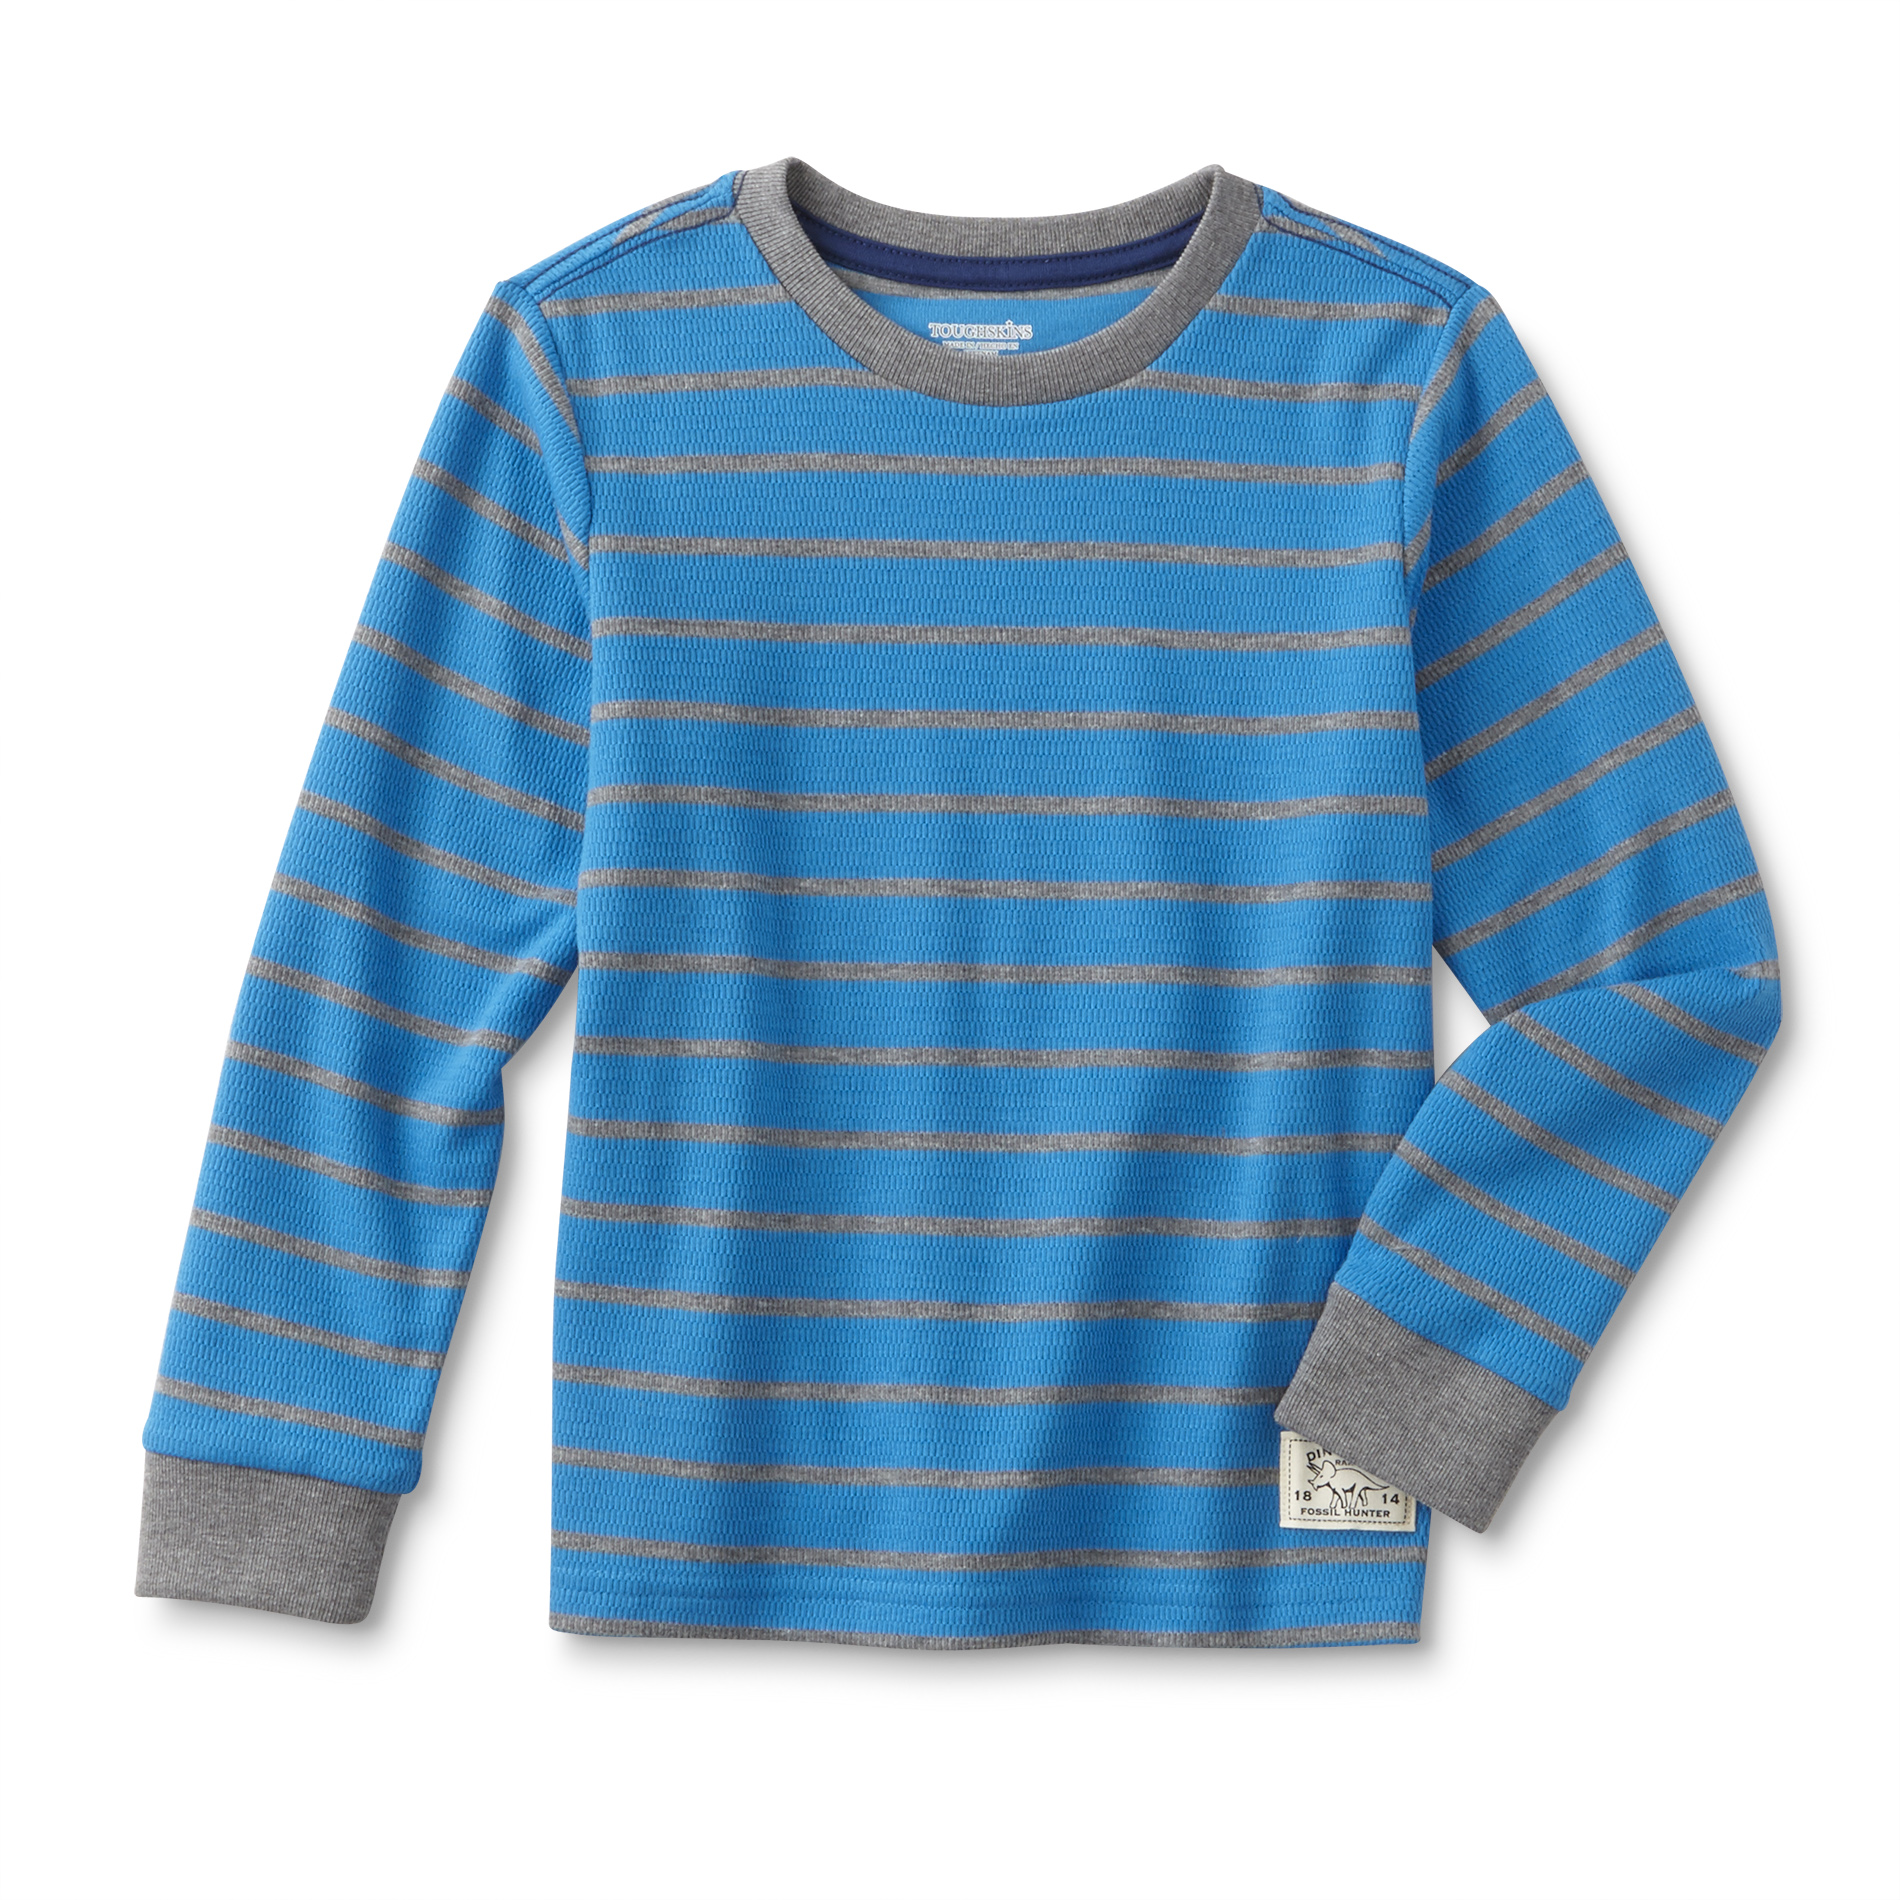 Toughskins Infant & Toddler Boy's Thermal Shirt - Striped